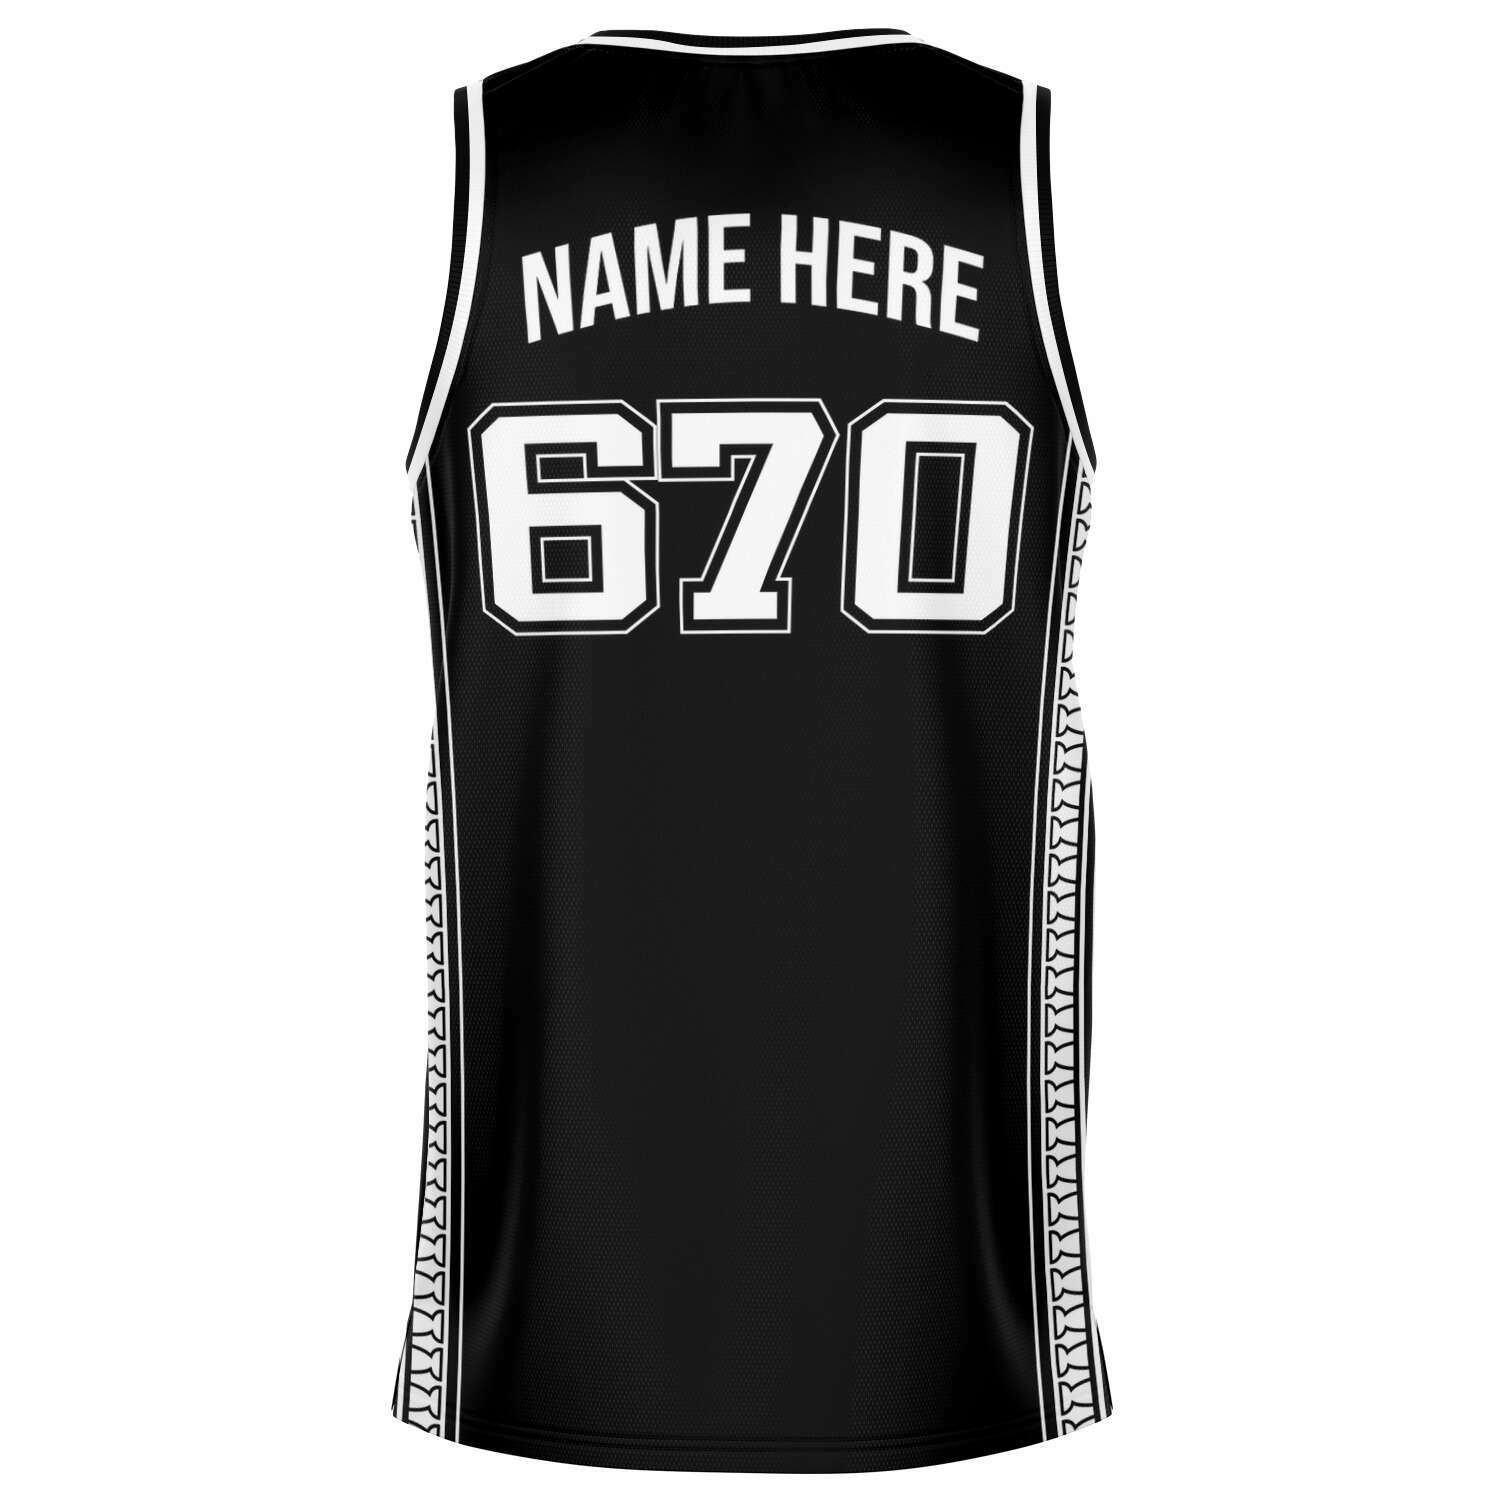 CNMI 670 Saipan Tribal Basketball Jersey with Personalization